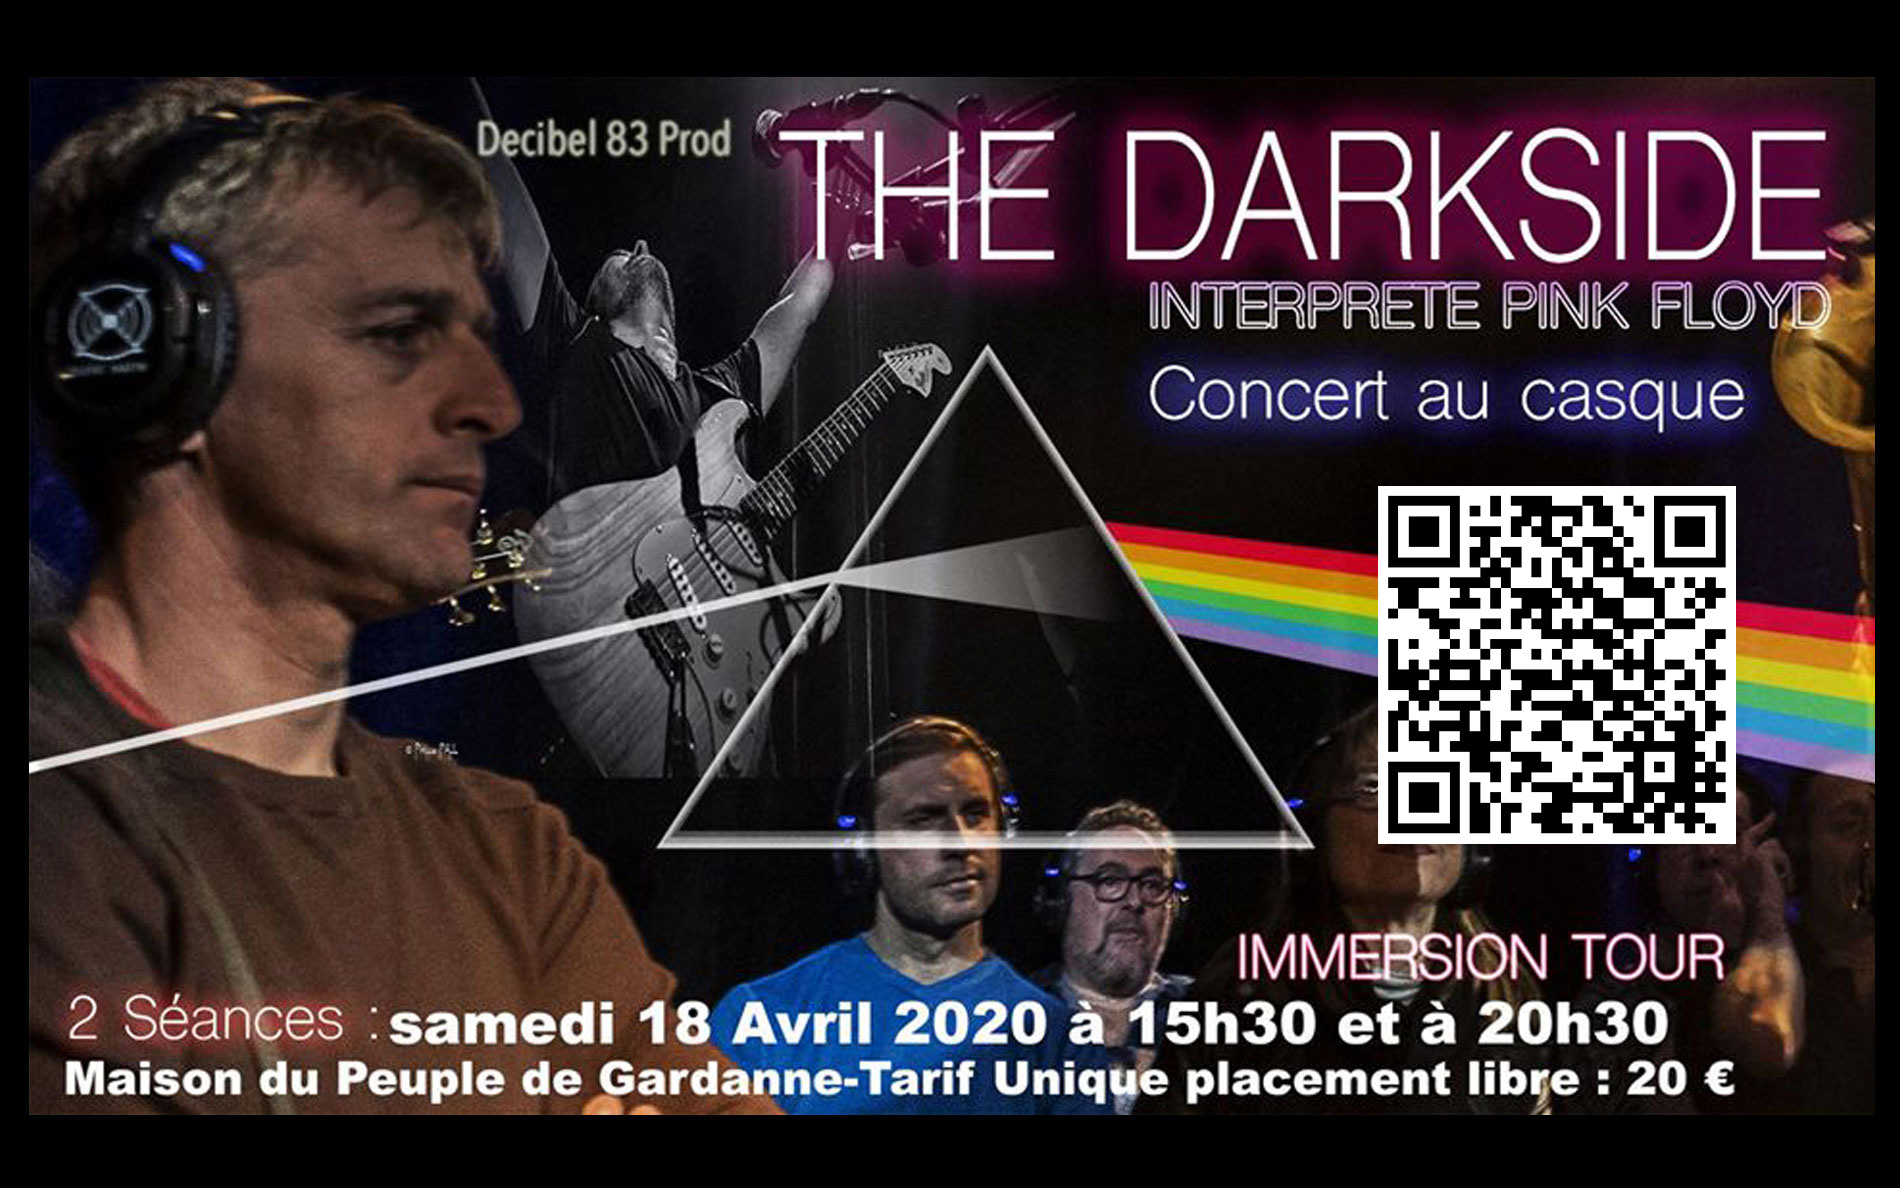 Evènement Facebook IMMERSION TOUR #3 - The Darside interprète Pink Floyd